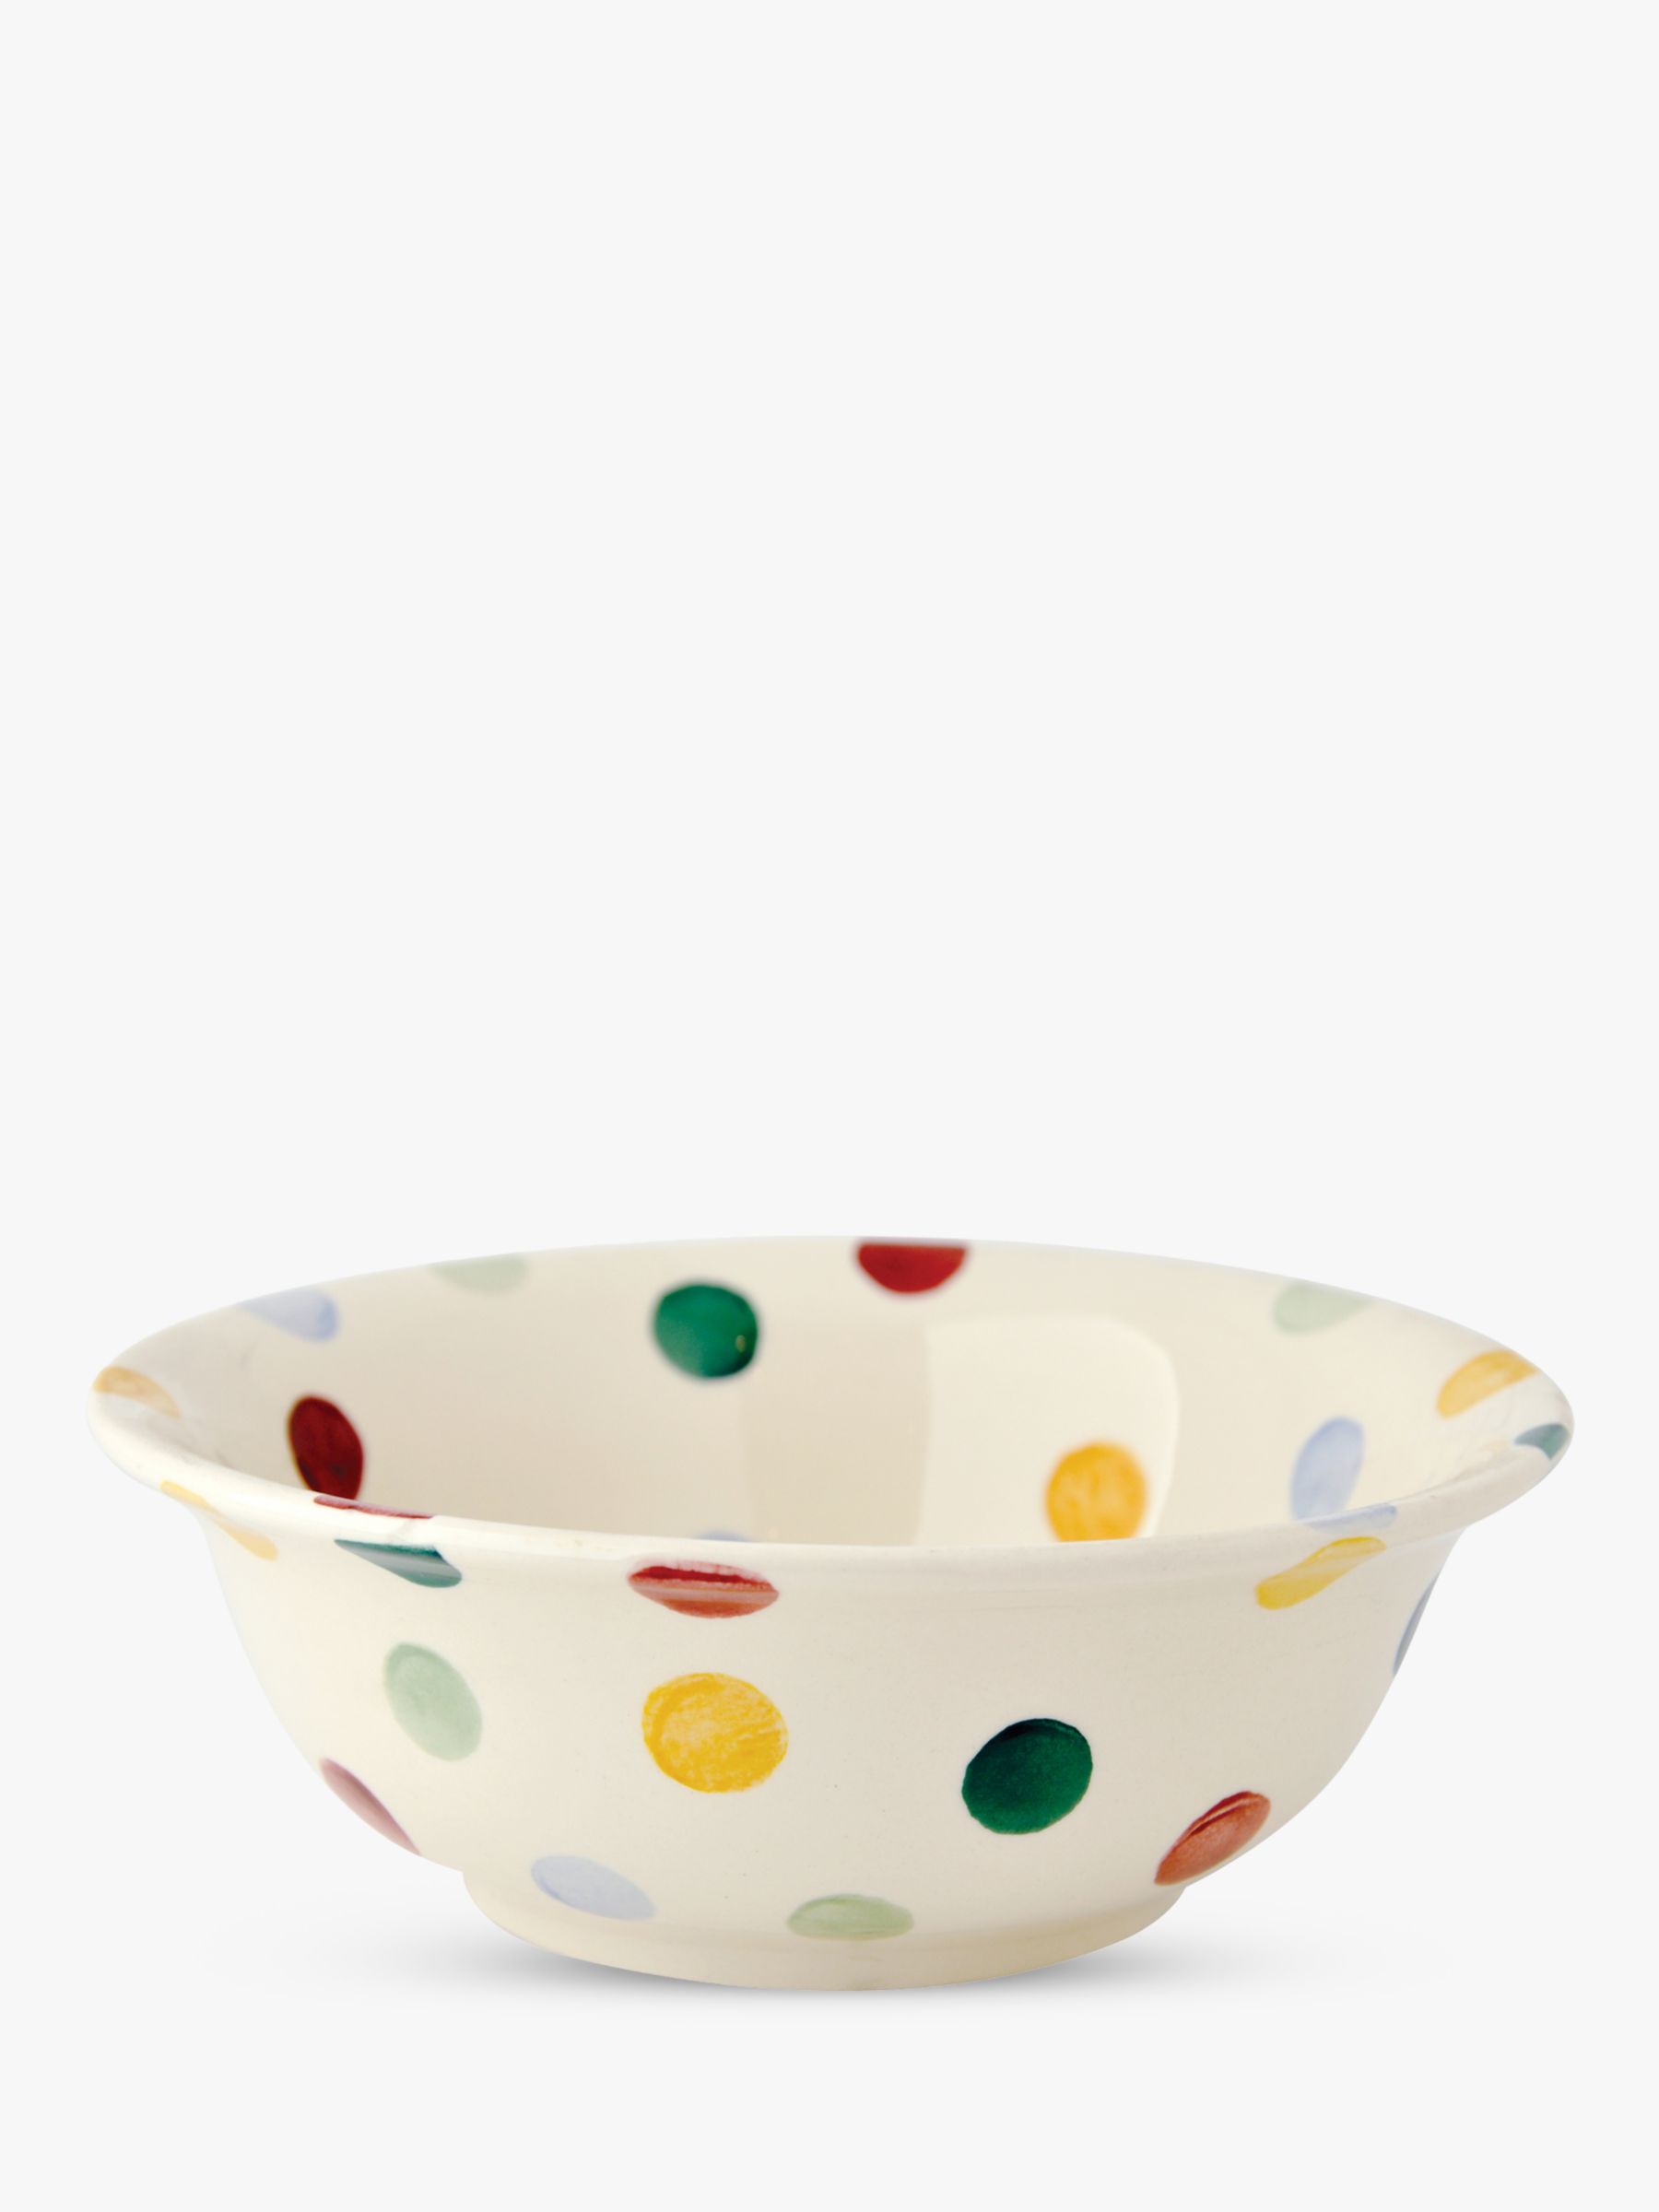 Emma Bridgewater Polka Dots Cereal Bowl